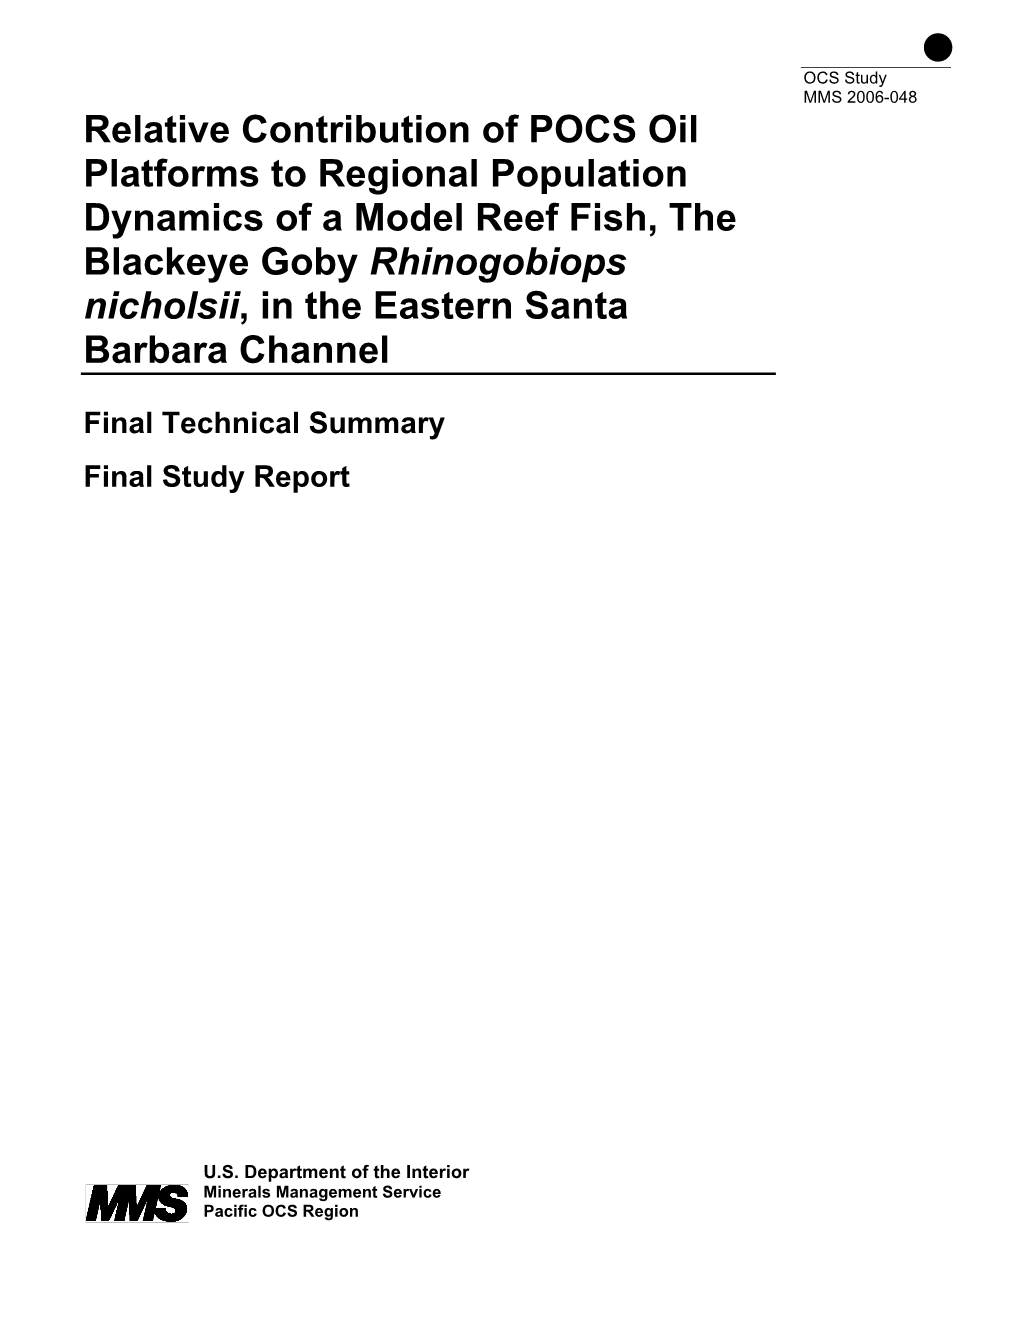 Relative Contribution of POCS Oil Platforms to Regional Population